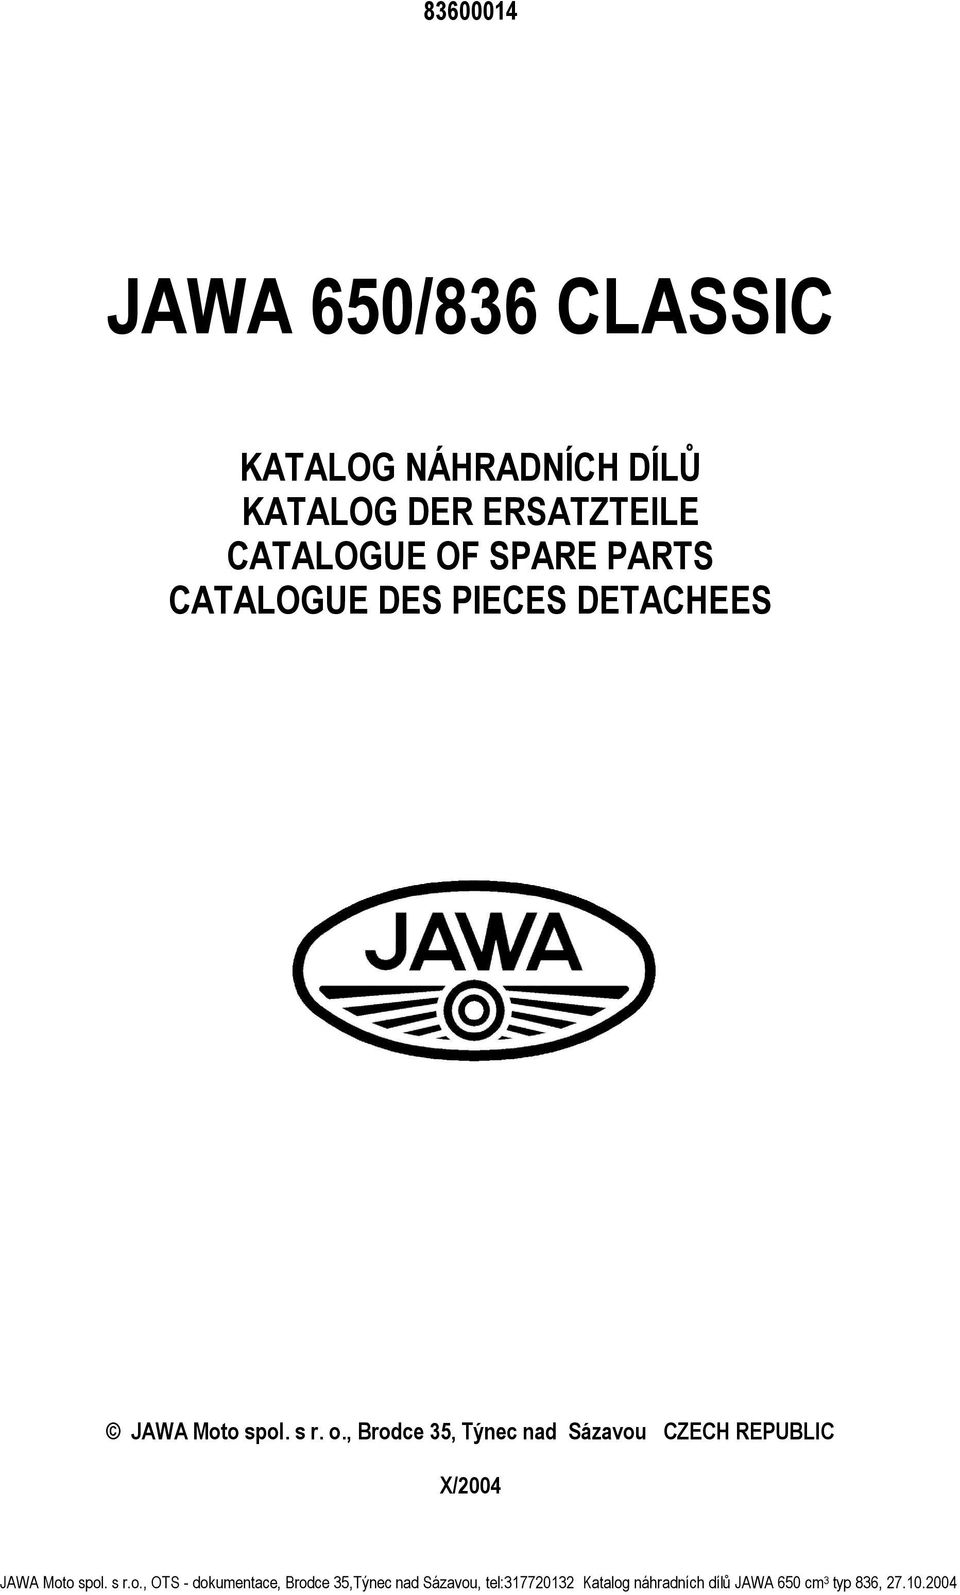 PARTS CATALOGUE DES PIECES DETACHEES JAWA Moto spol.